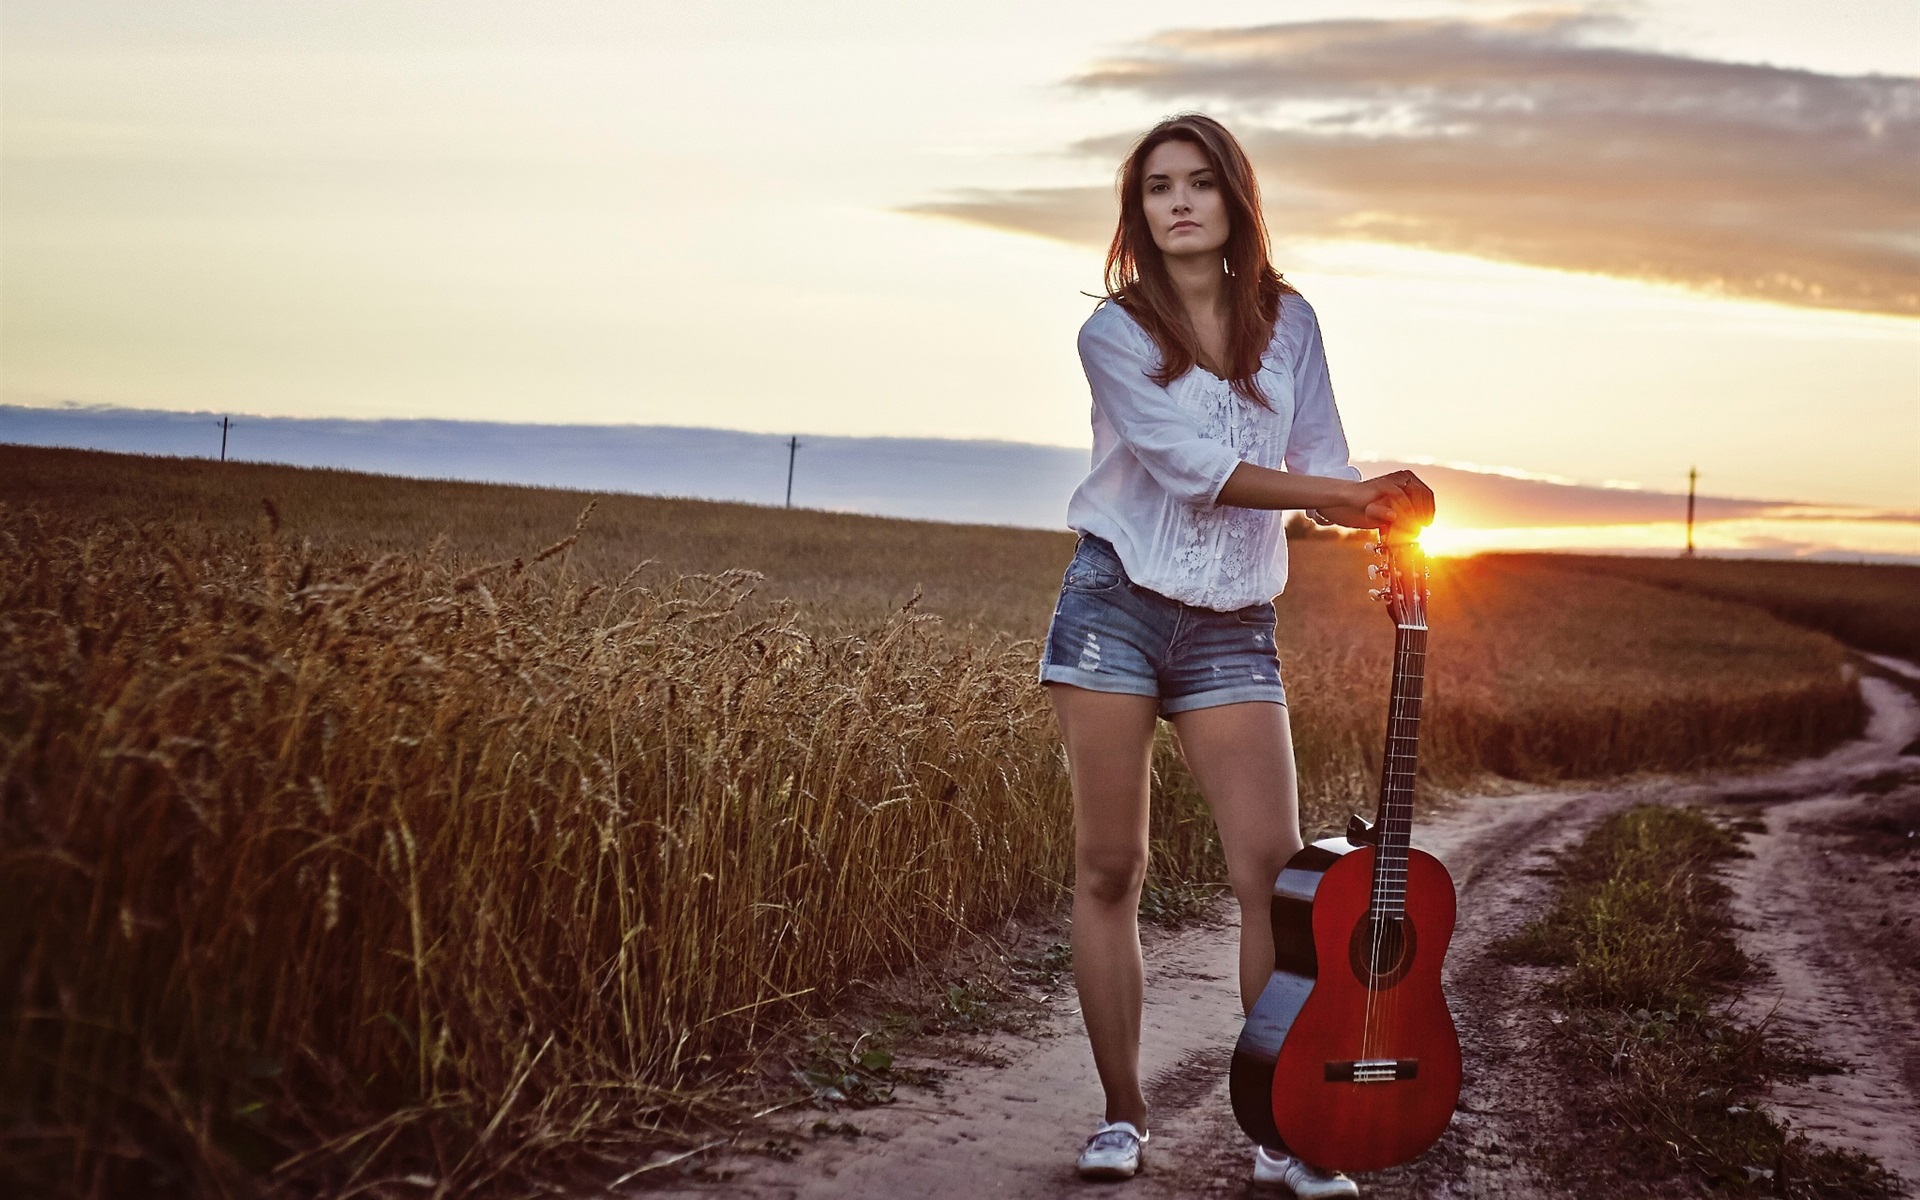 Long-hair-girl-guitar-sunset-fields_1920x1200.jpg